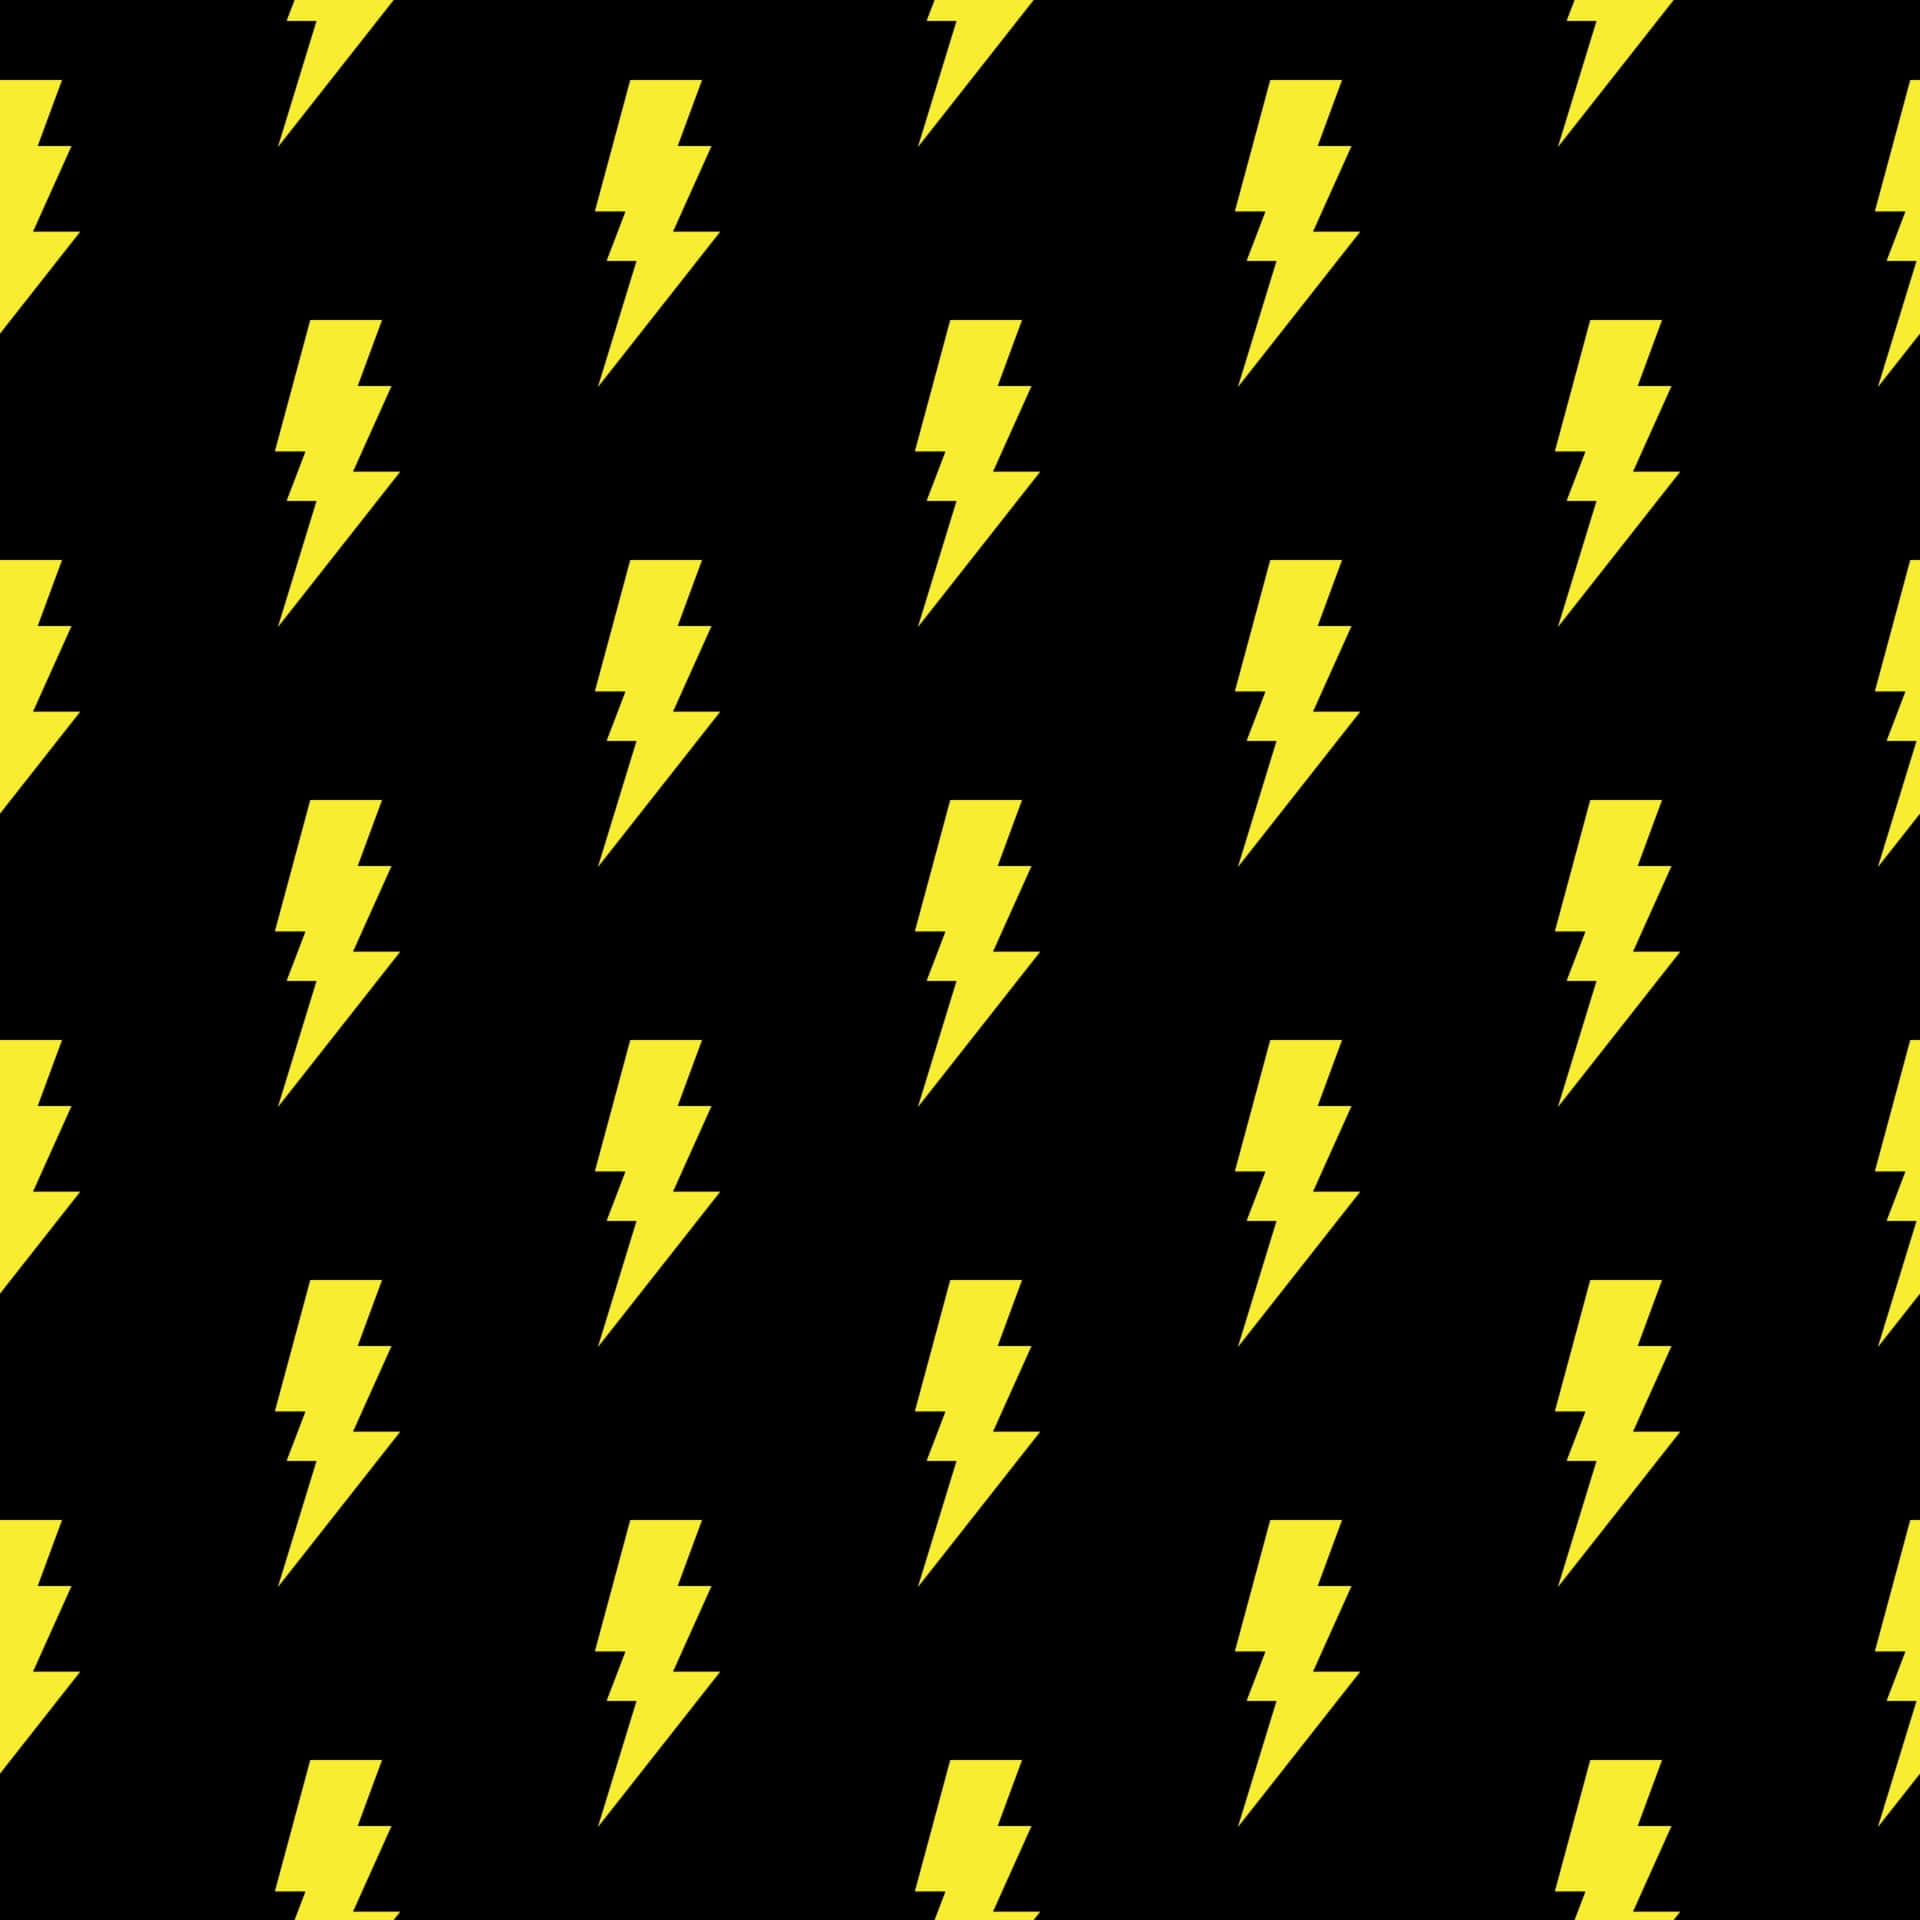 Lightning Bolt Iphone Wallpaper